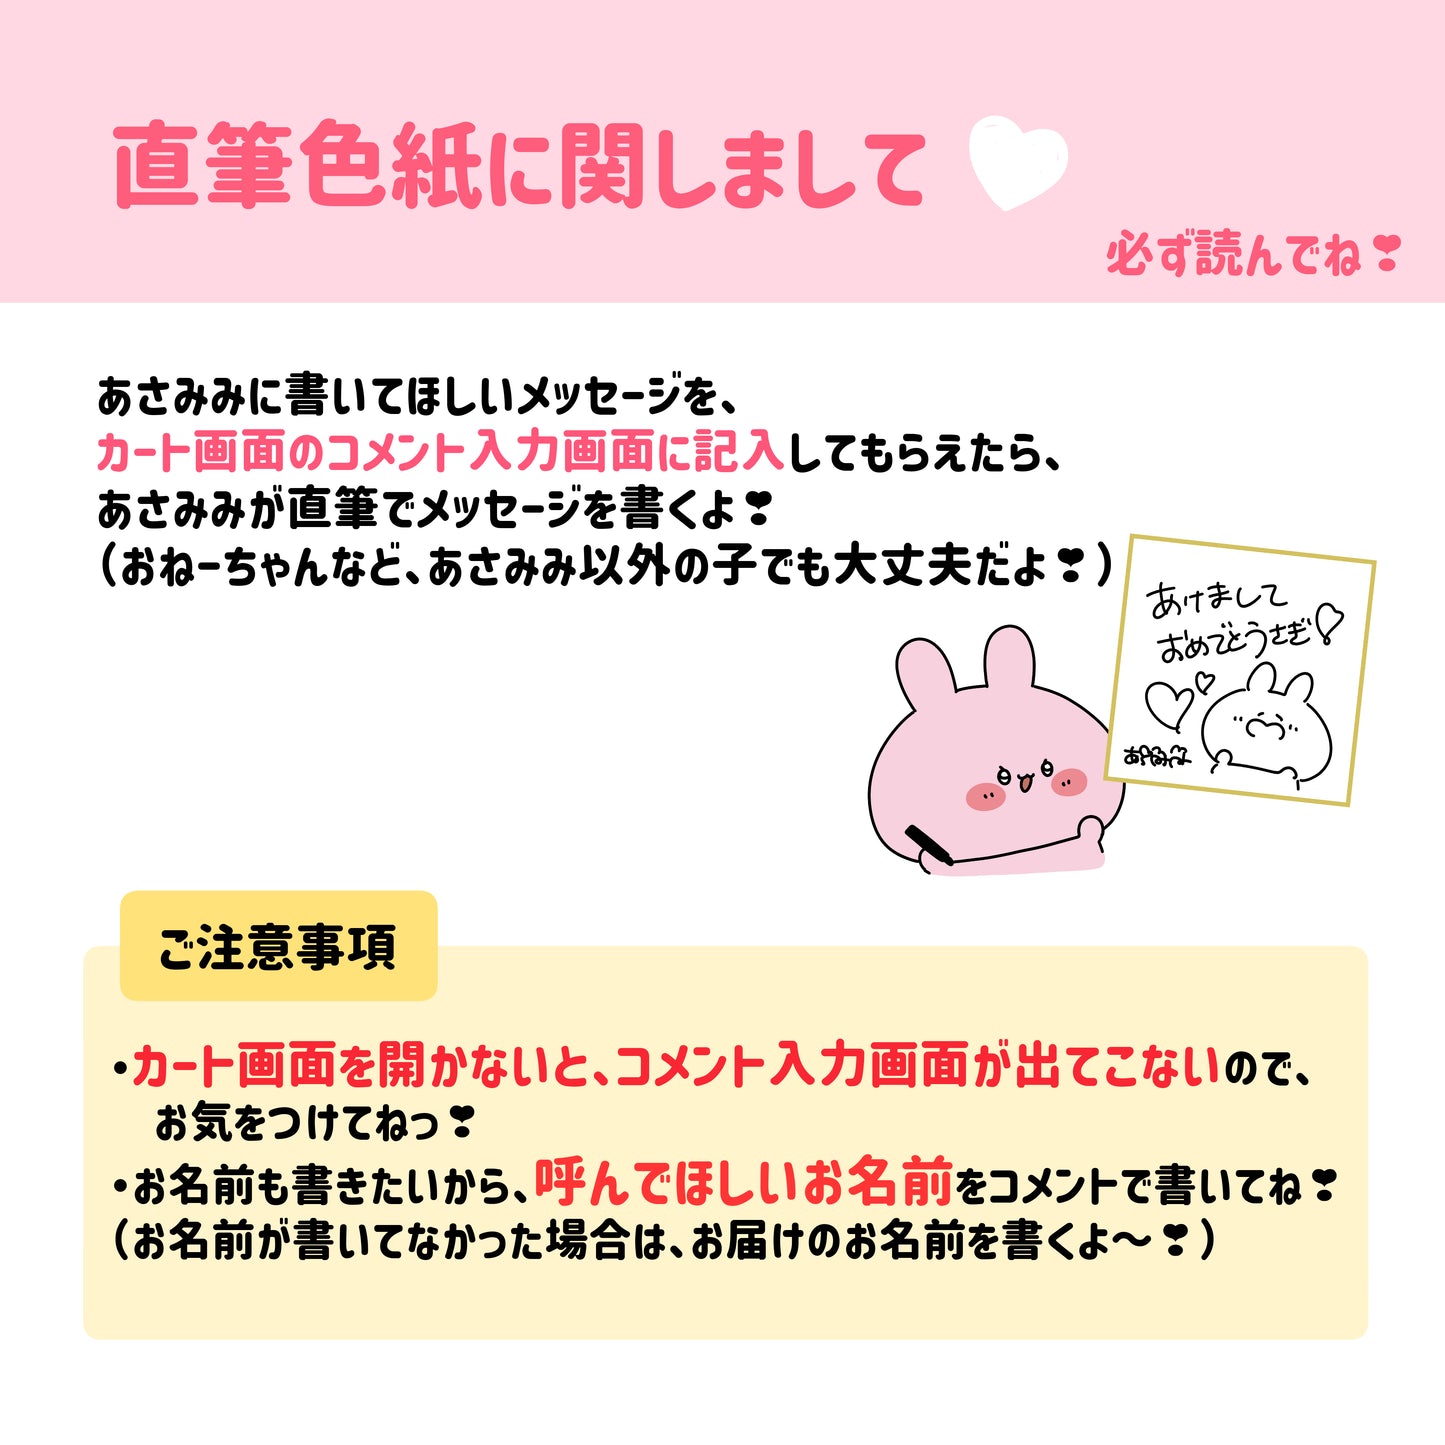 [Asamimi-chan] ASAMIMI HAPPY BAG 2024 (¥ 10.000) [Versand Mitte Januar]